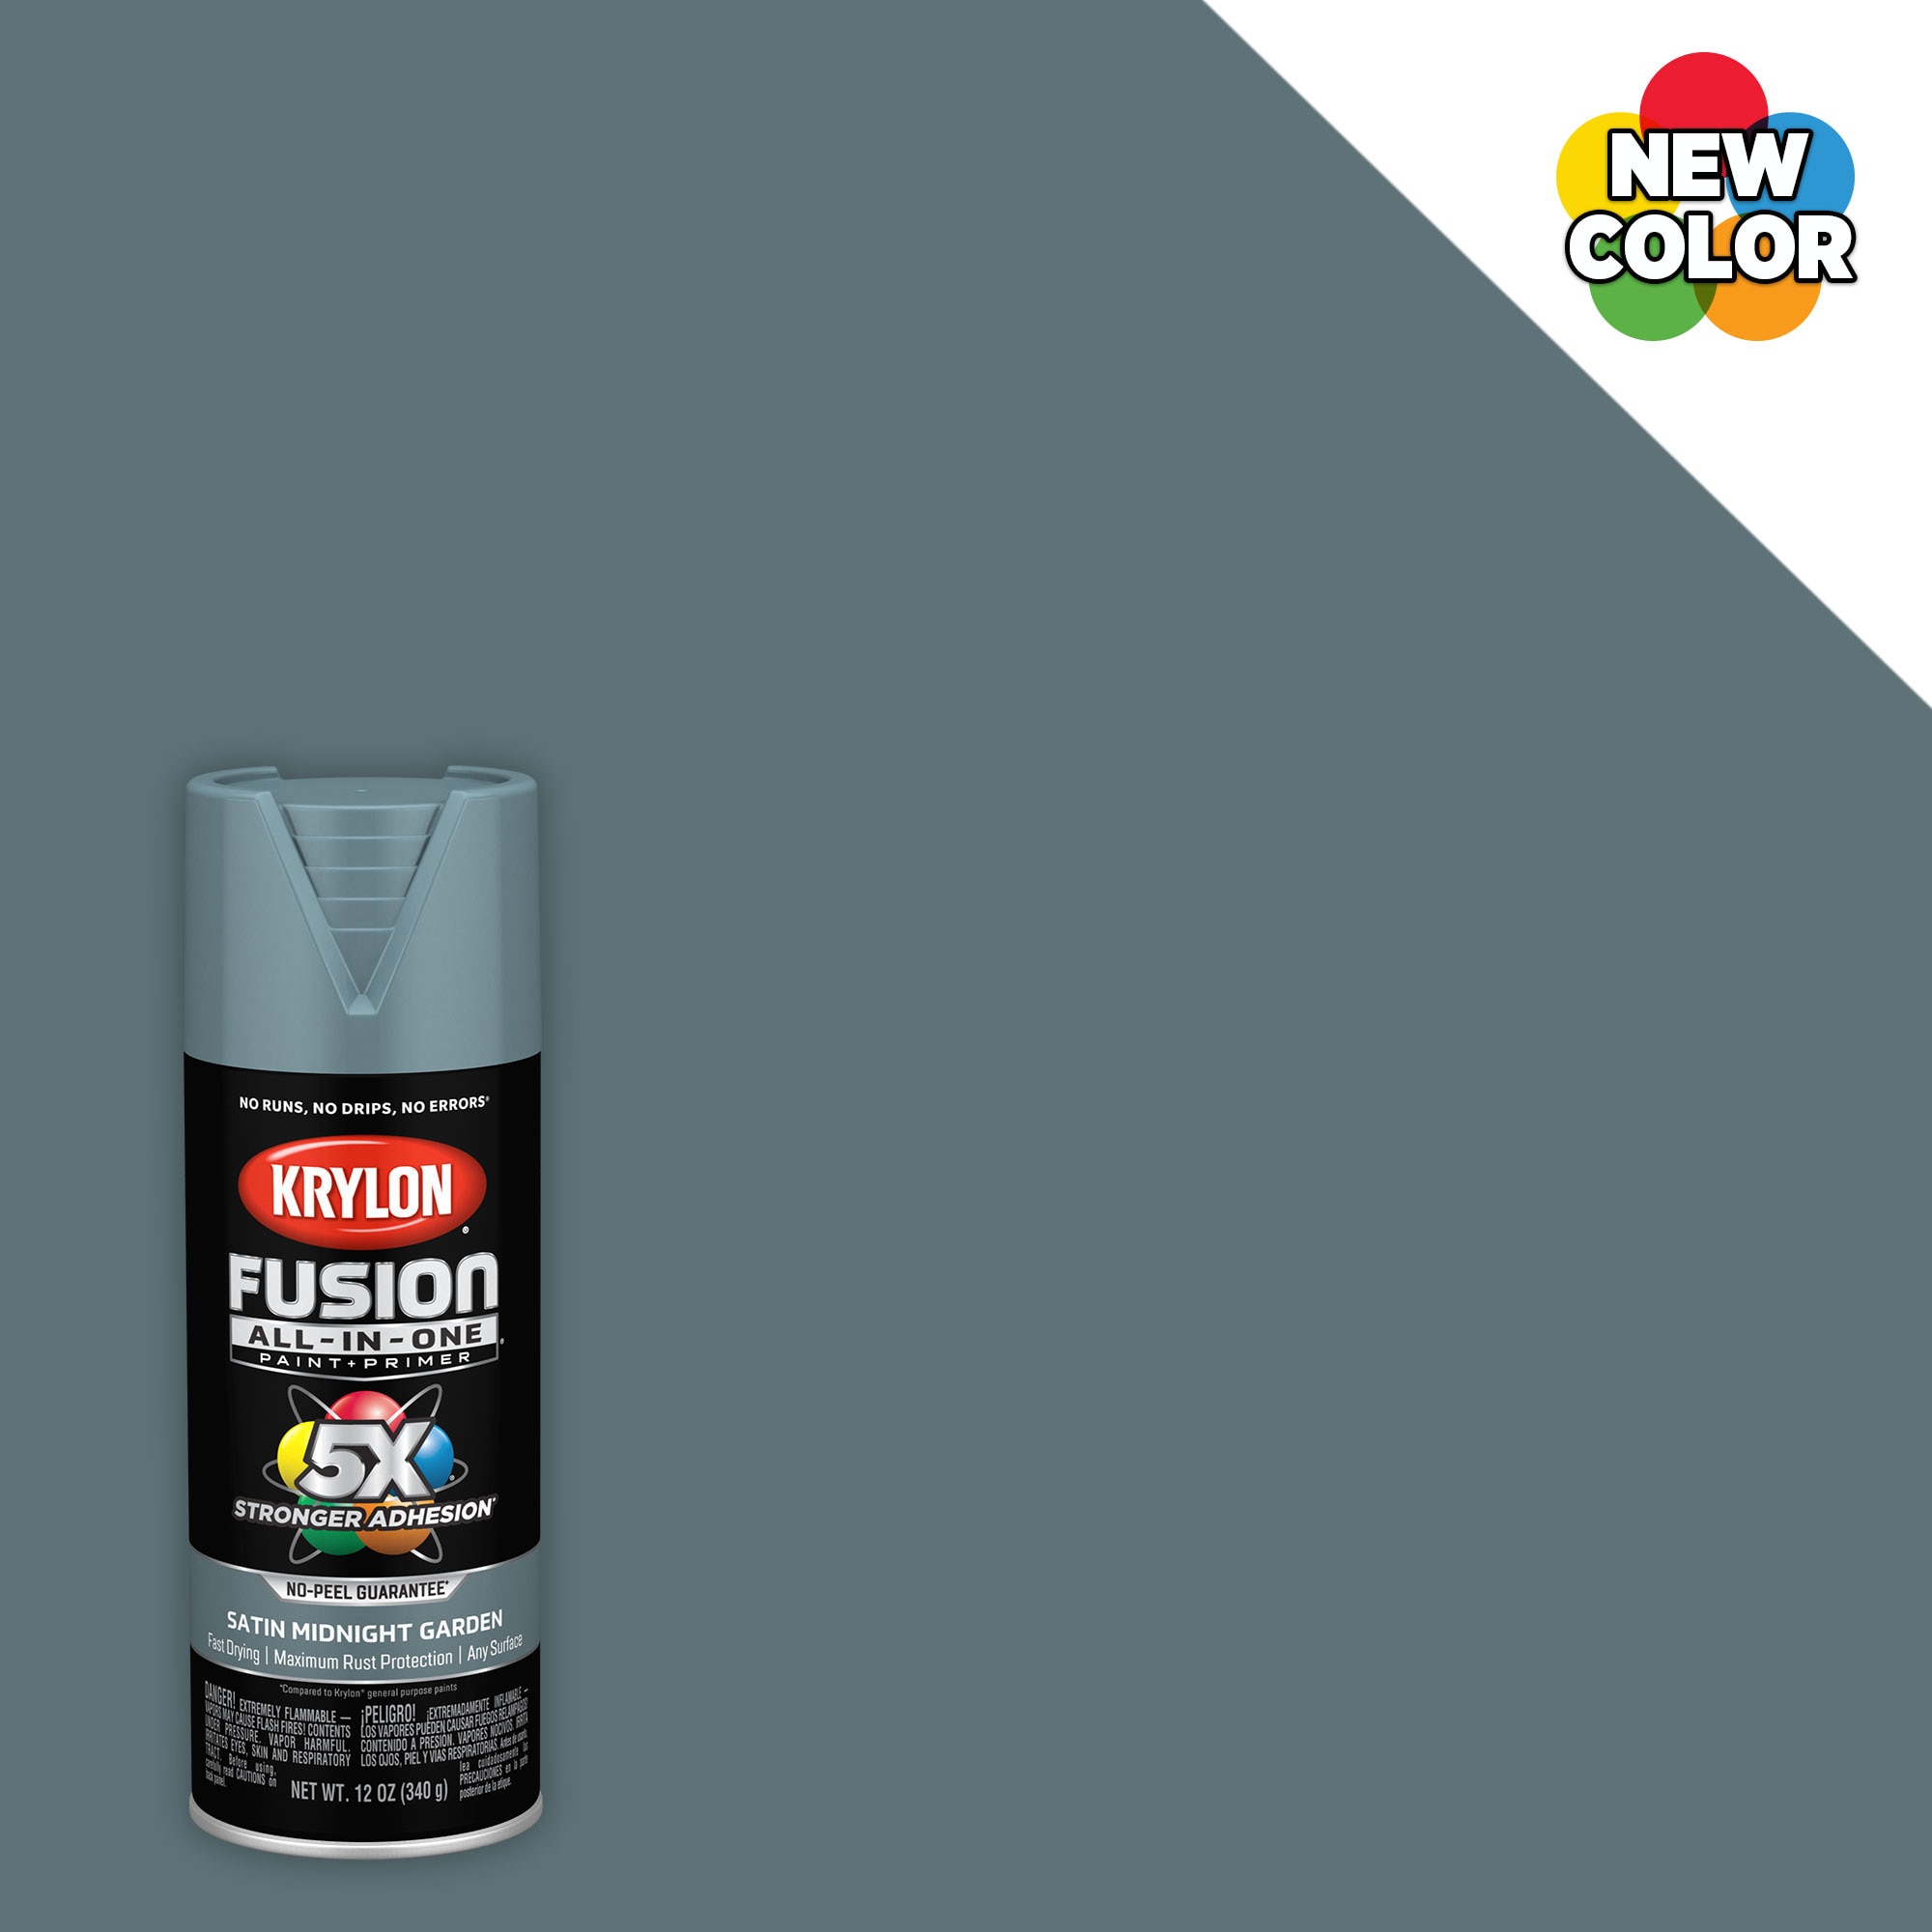 Krylon Professional Satin Stainless Steel Spray Paint (NET WT. 15-oz) at